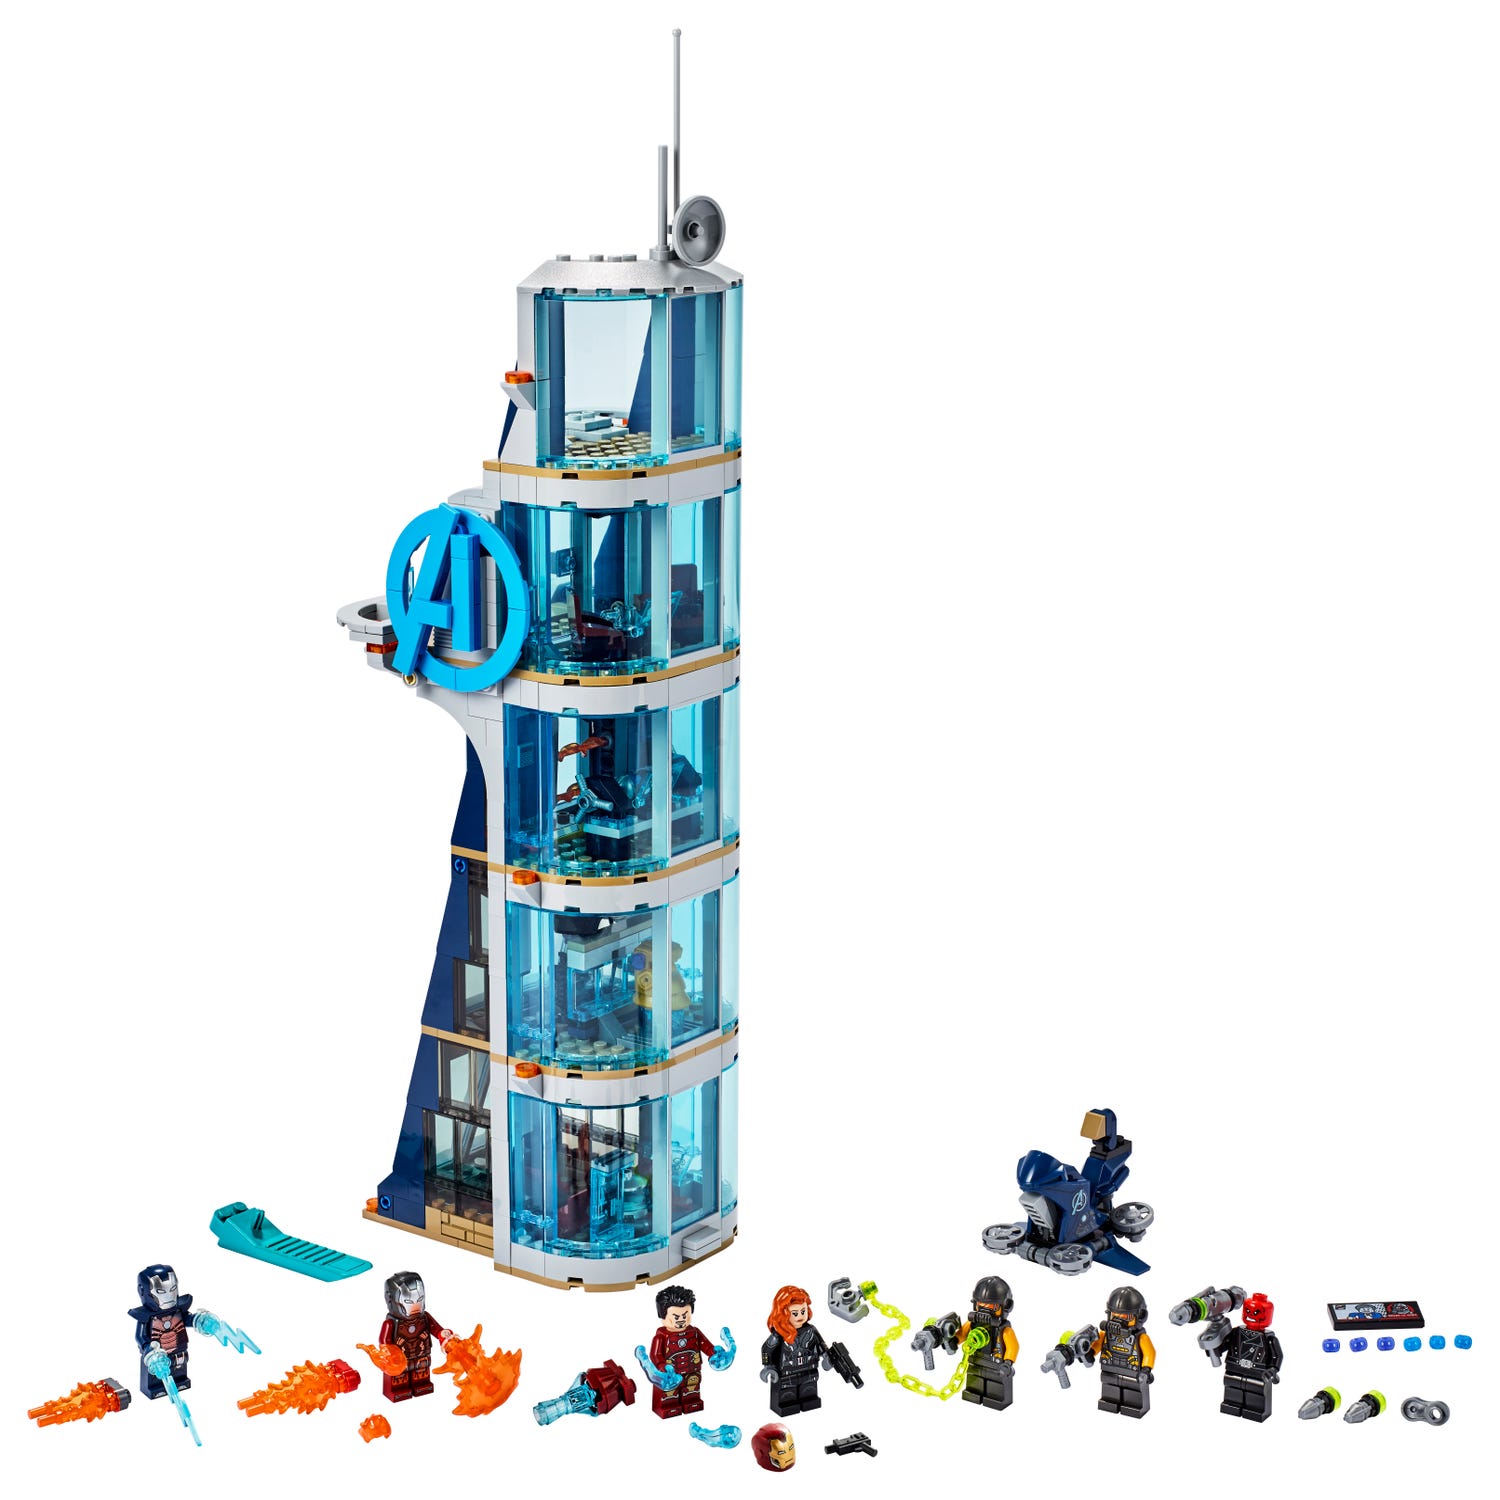 LEGO Marvel Avengers: Avengers Tower Battle 76166 Collectible